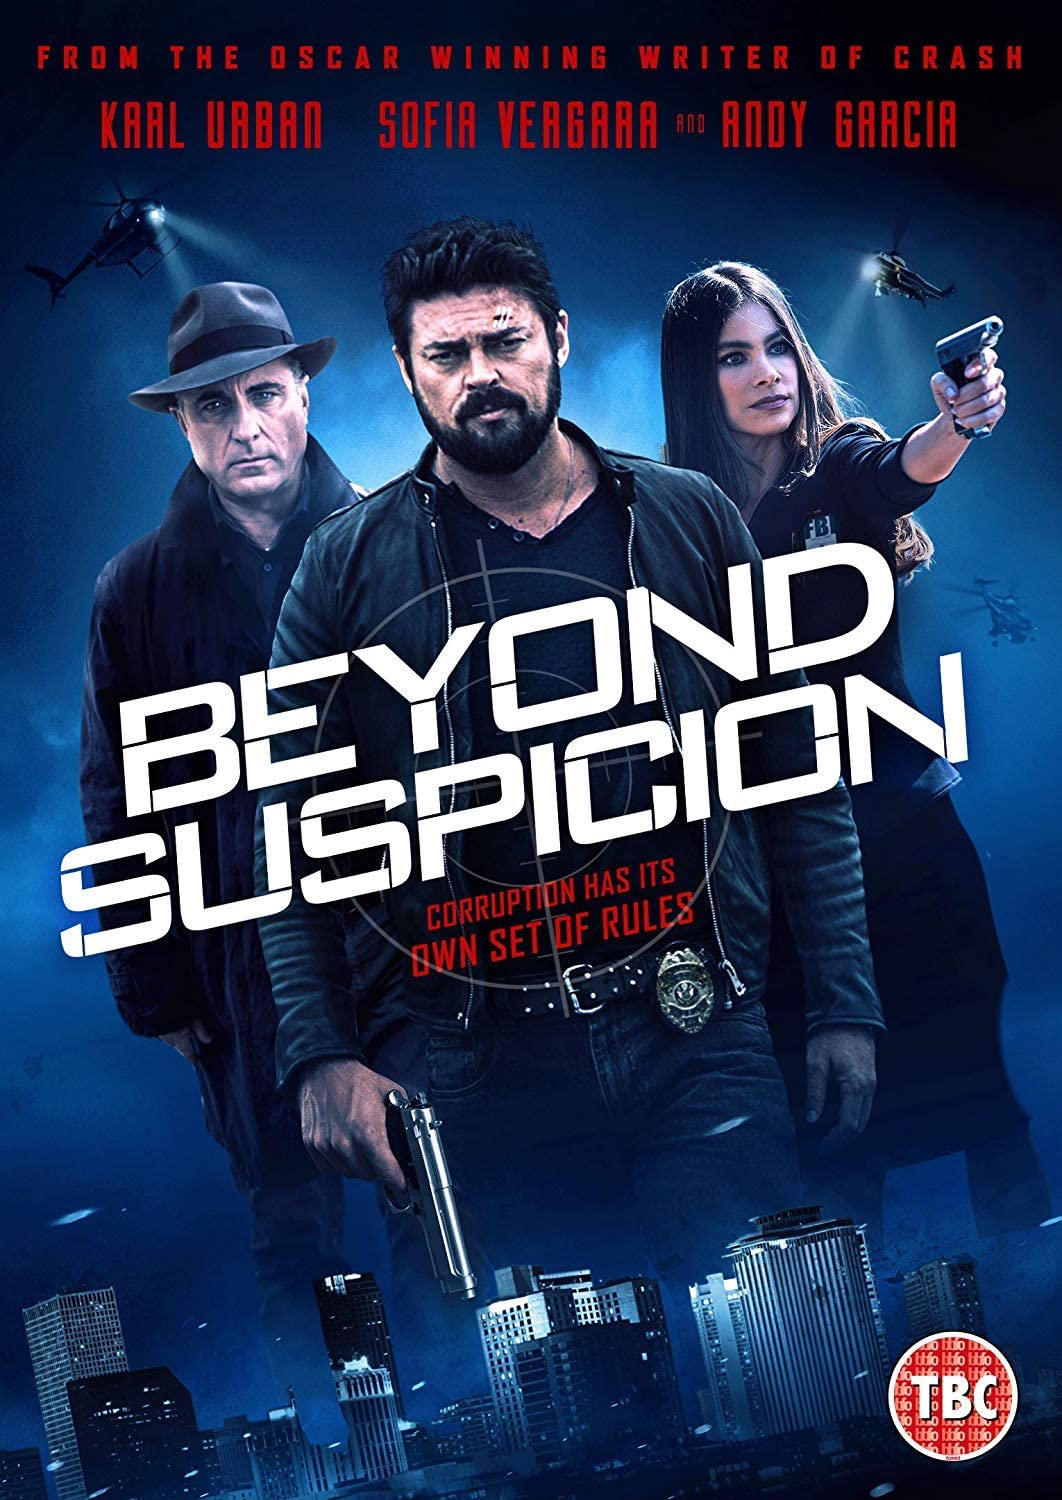 Beyond Suspition - Drama/Crime [DVD]